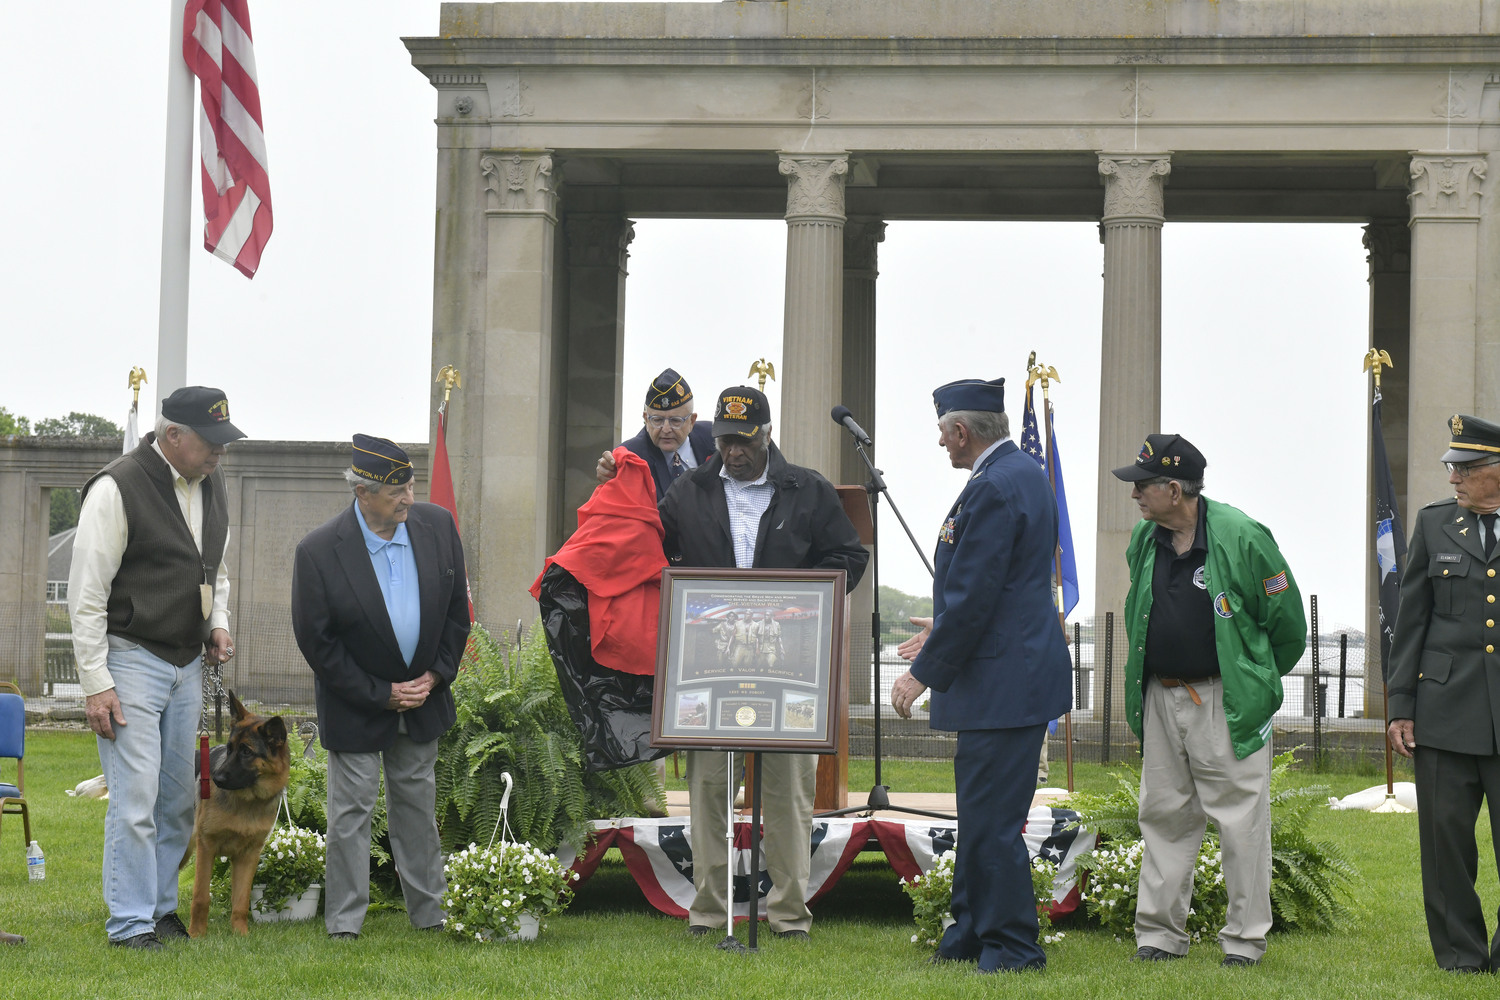 Vietnam Veteran Alvin Woods unveils the plaque honoring Vietnam Veterans which will be hung in Veterans Hall.